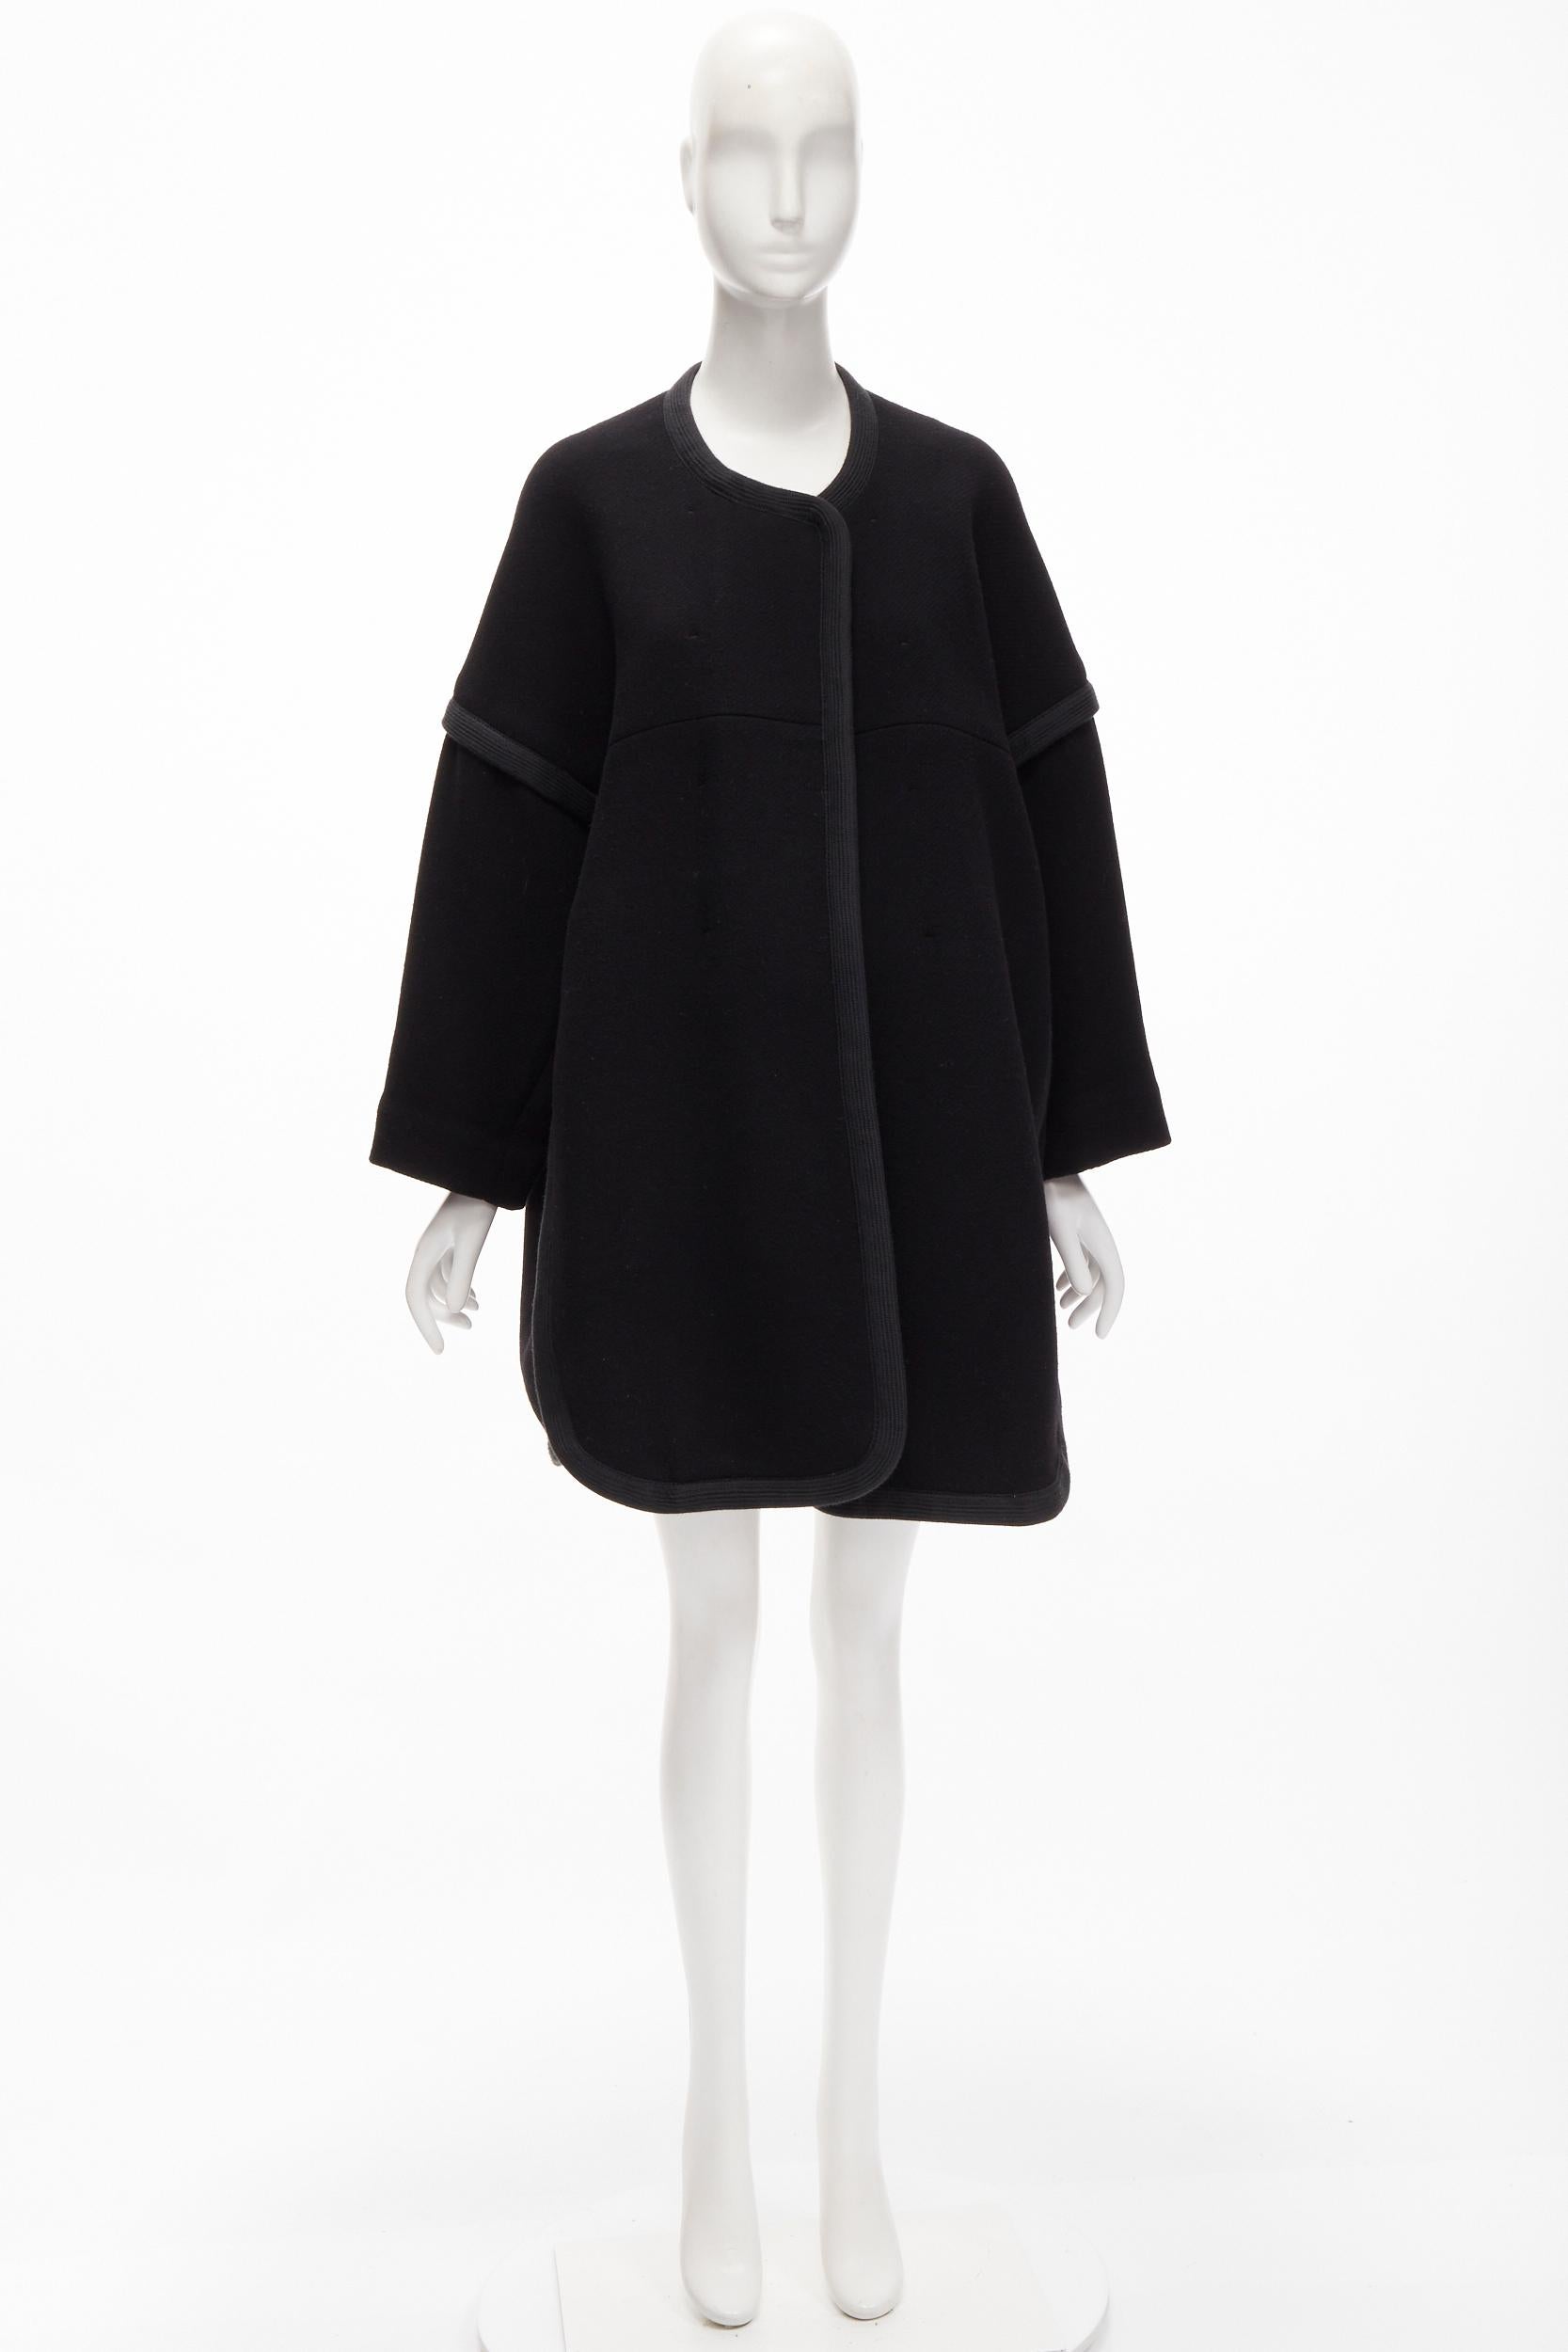 CHLOE virgin wool blend black cotton trim wide sleeve boxy cocoon coat FR34 XS 7